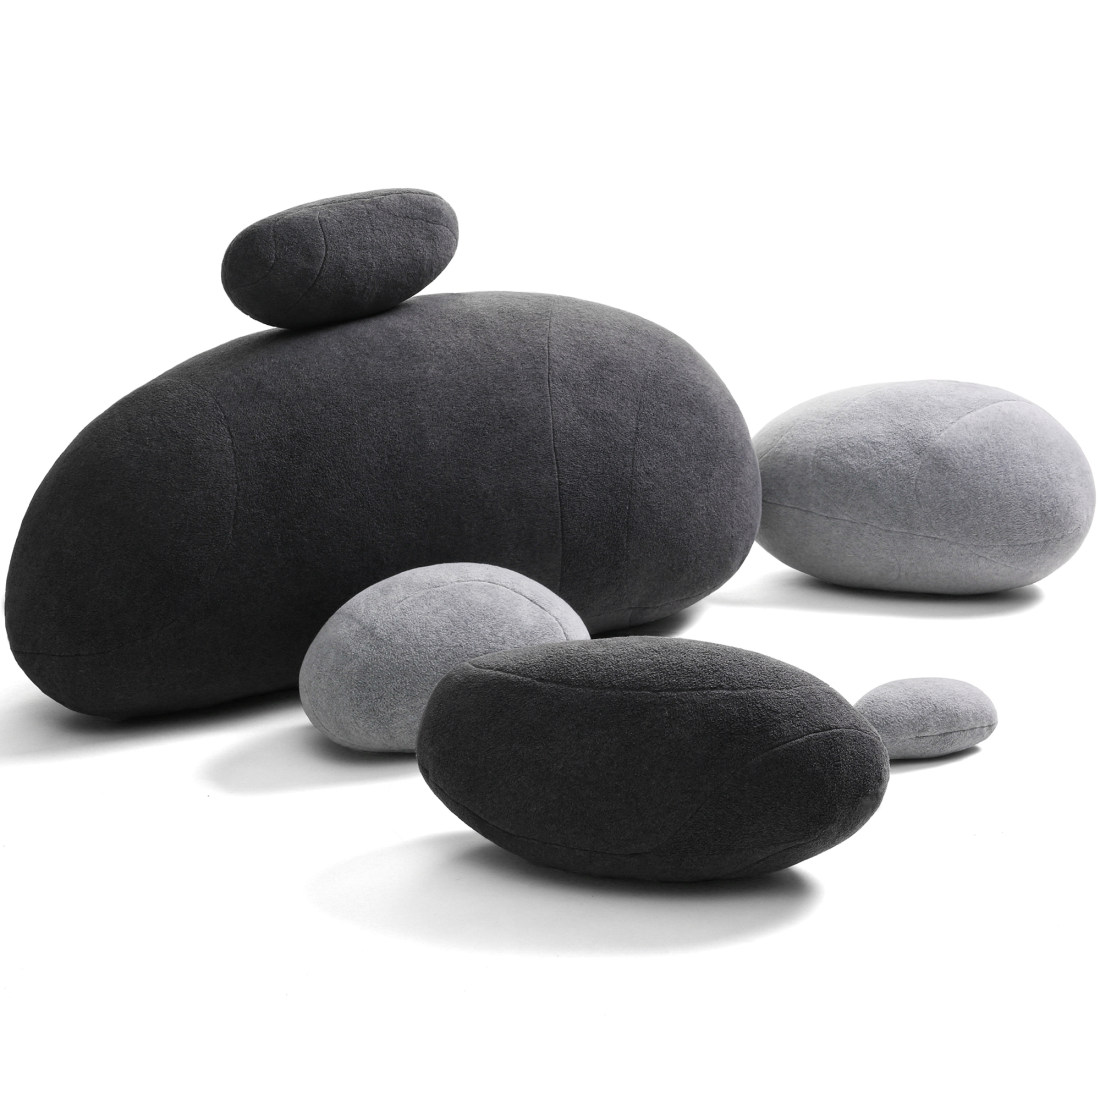 WOWMAX Three-Dimensional Curve Living Stones Pillows 6 Mix Sizes Stuffed Pillows Big Rock Pillows New Pebble Pillows Dark Gray Mix 